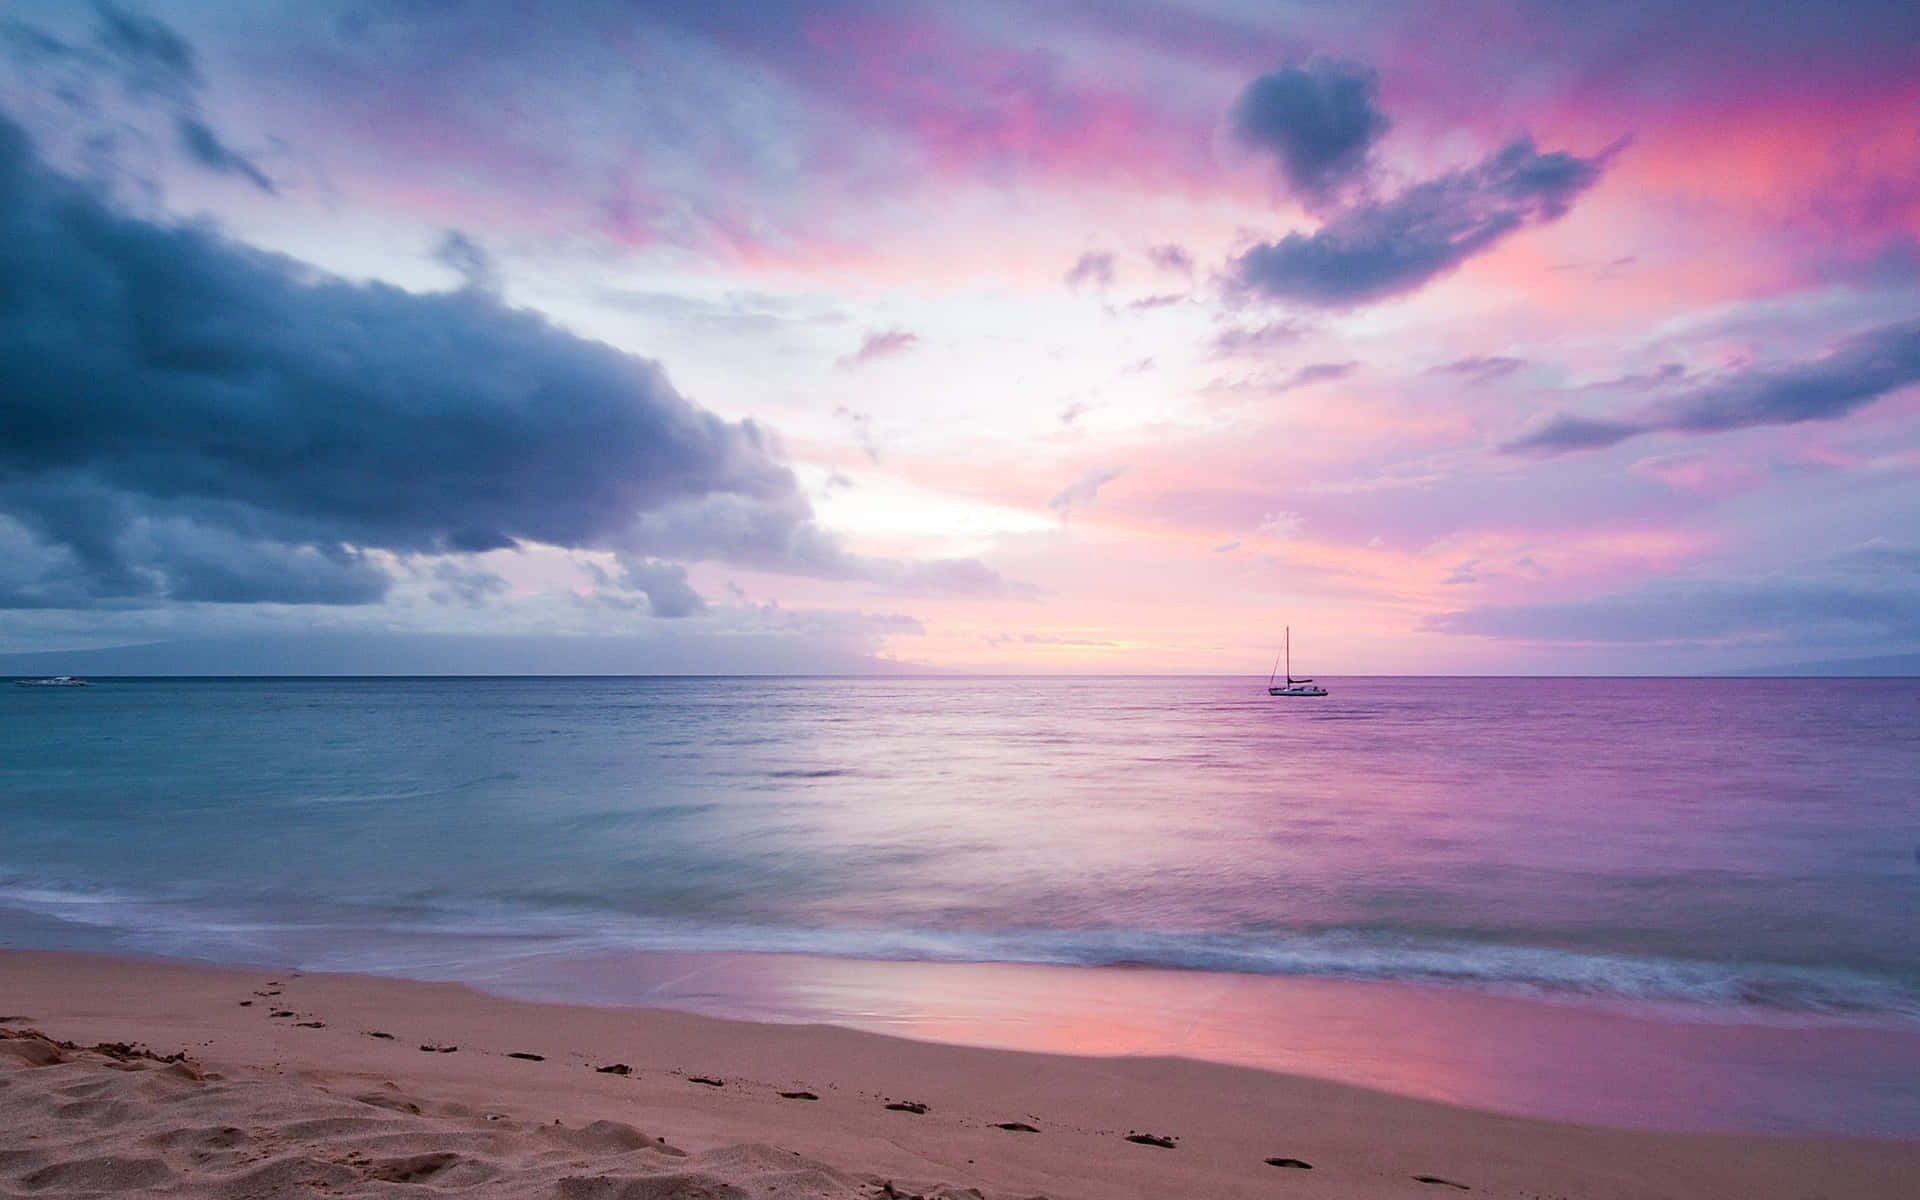 Caption: Serene Sunset at a Beautiful Beach